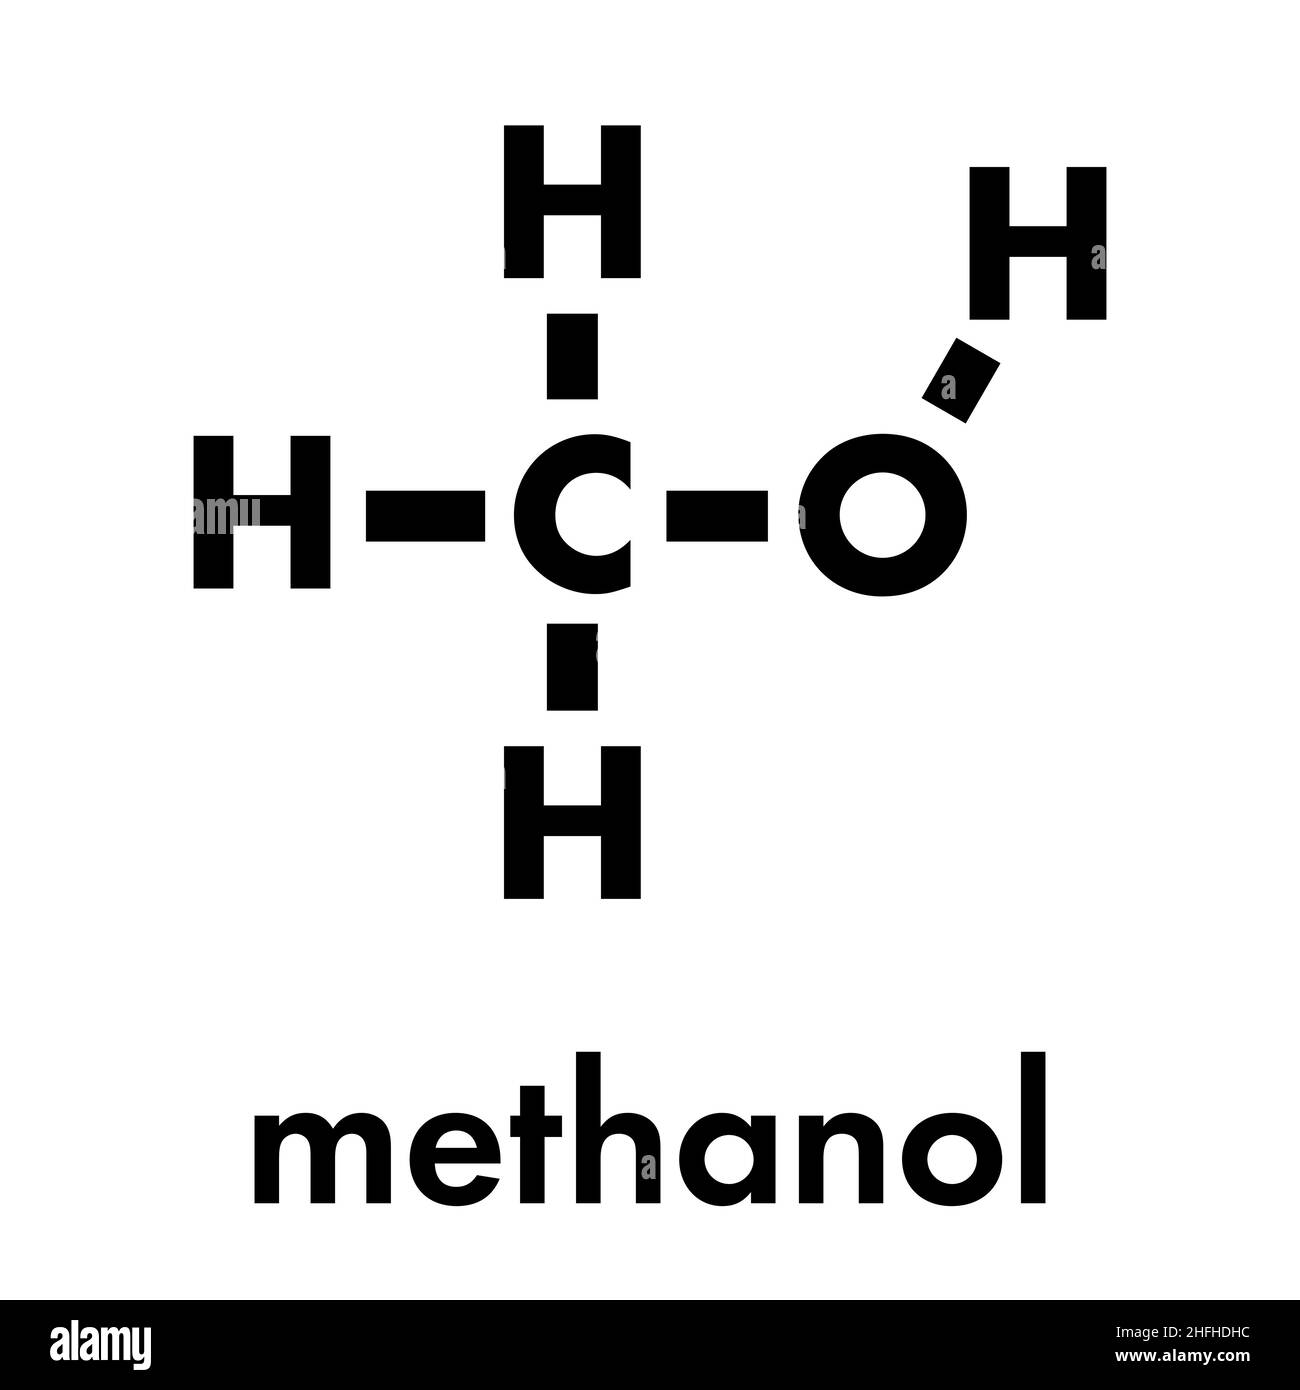 Methanol (methyl alcohol, MeOH) molecule. Highly toxic. Skeletal formula. Stock Vector